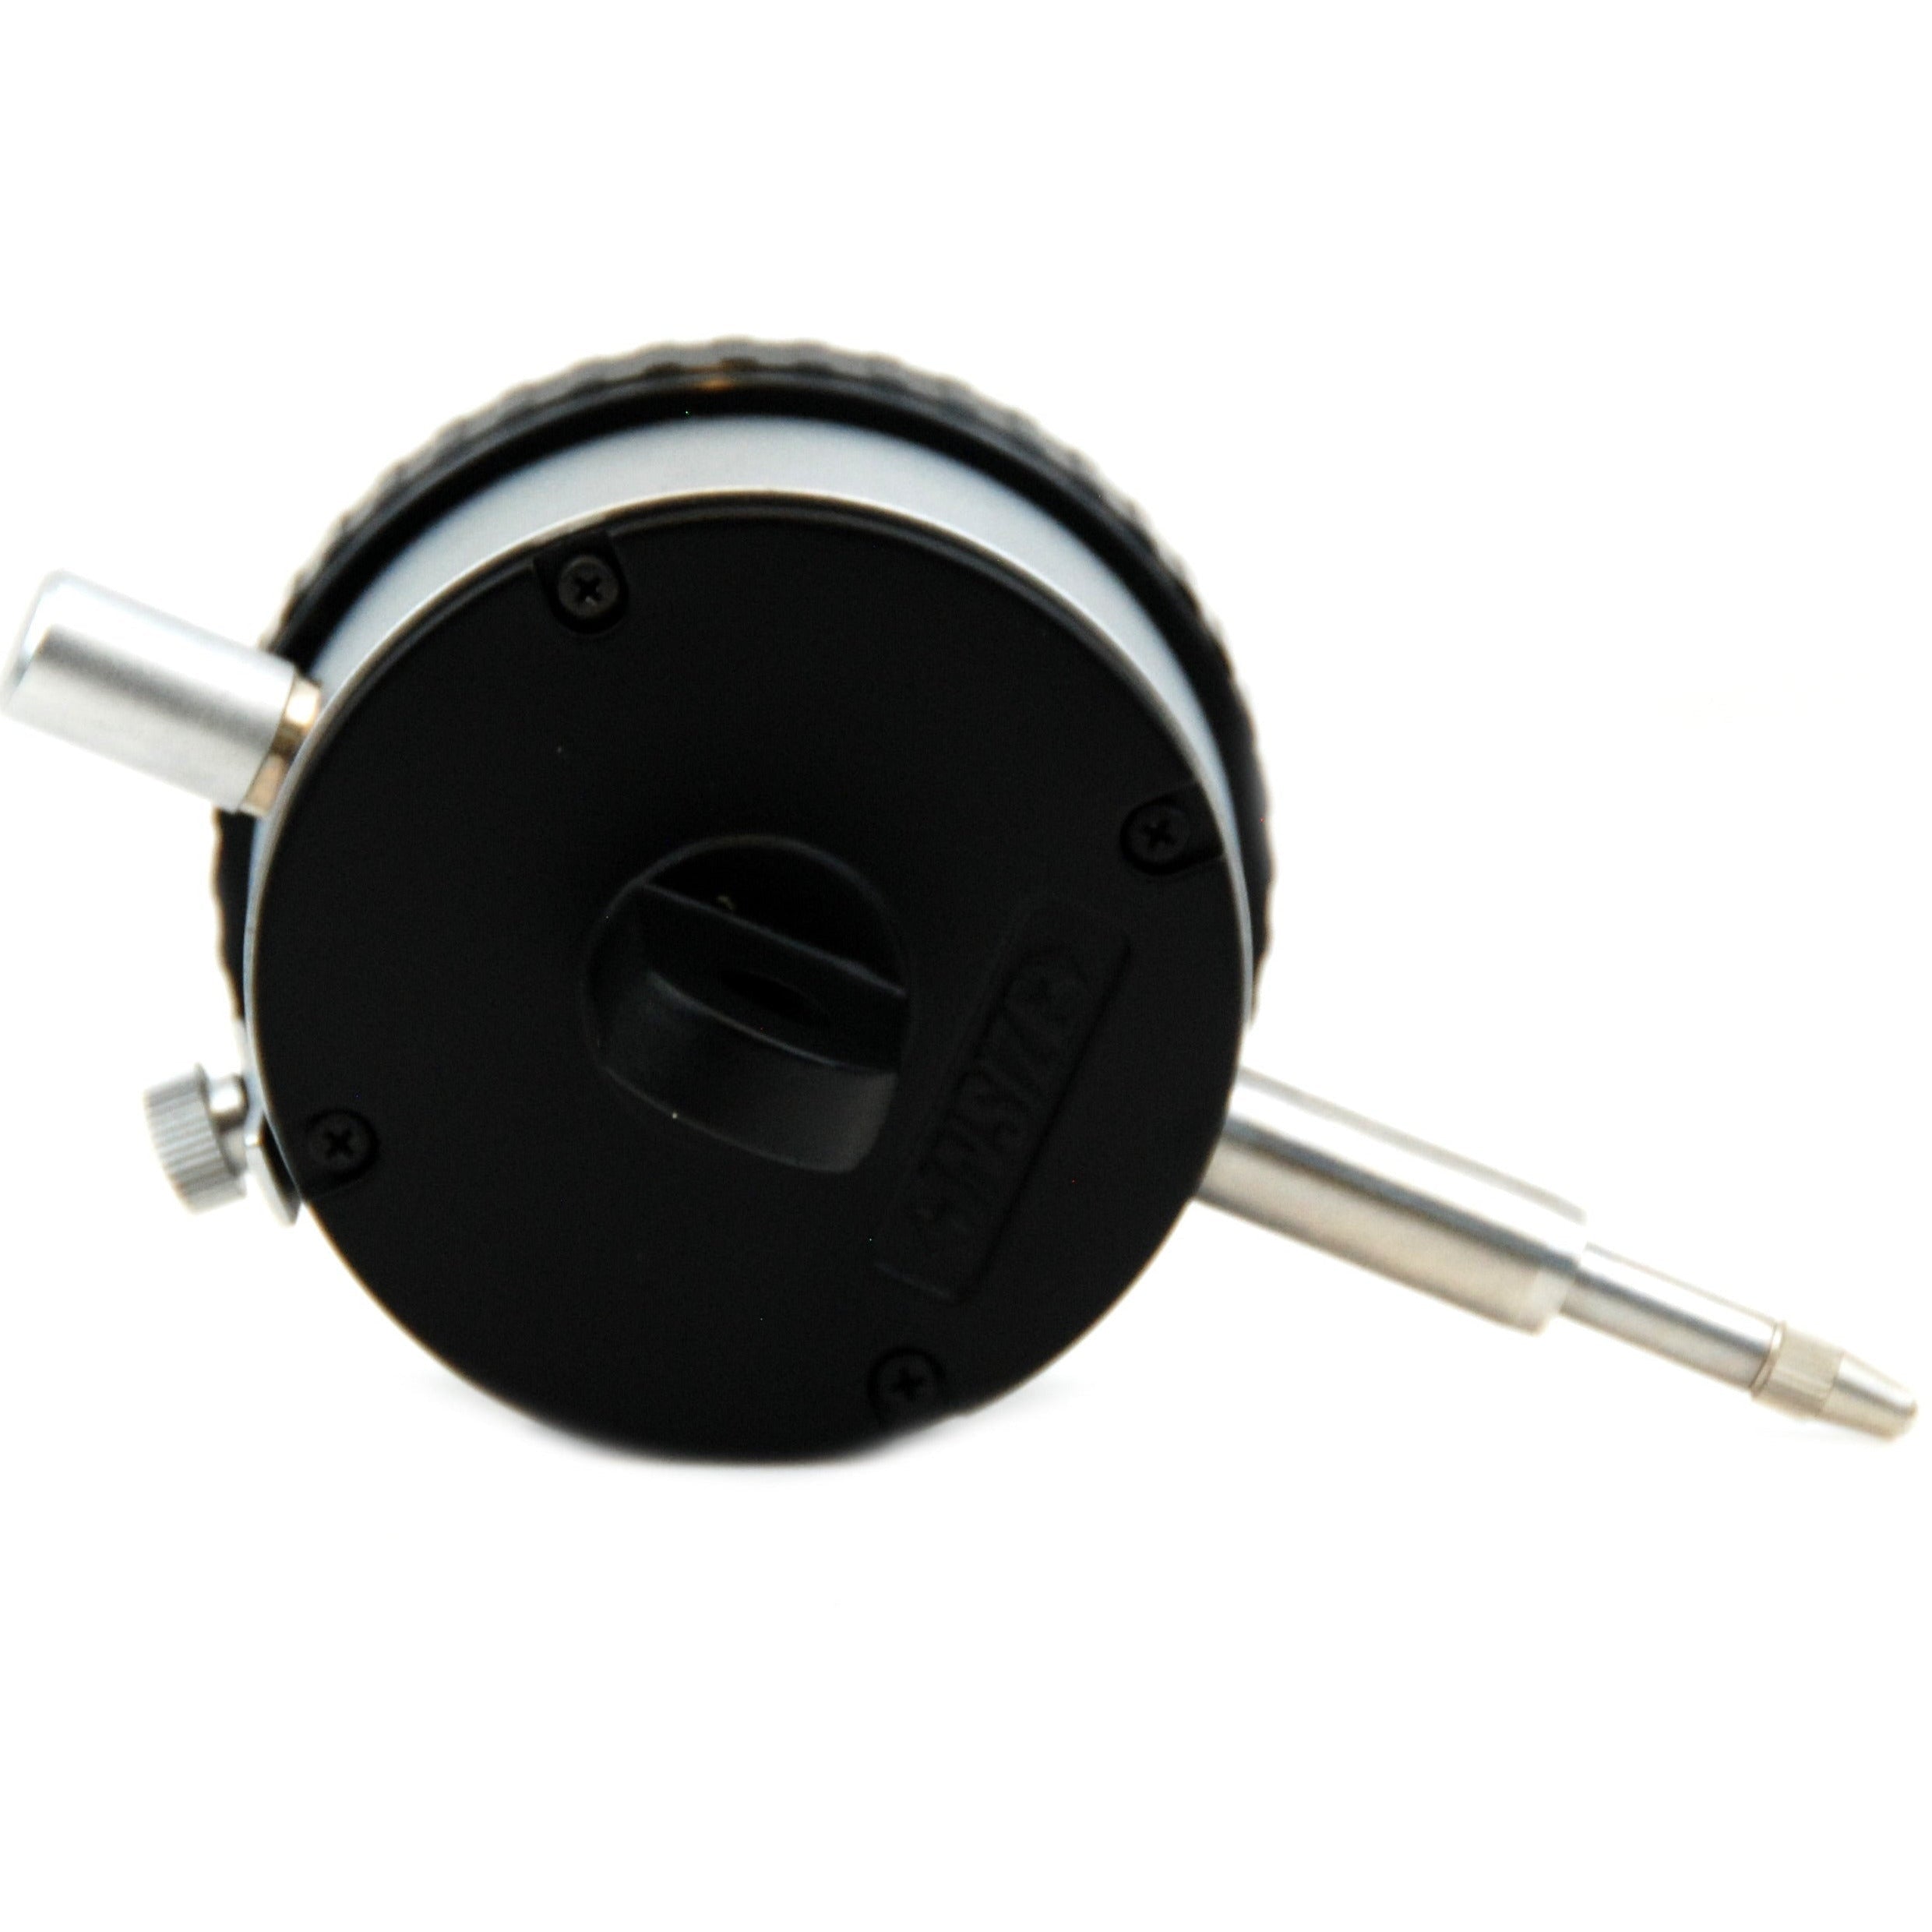 Insize Metric Lug Back Dial Indicator 3mm Range Series 2308-3A